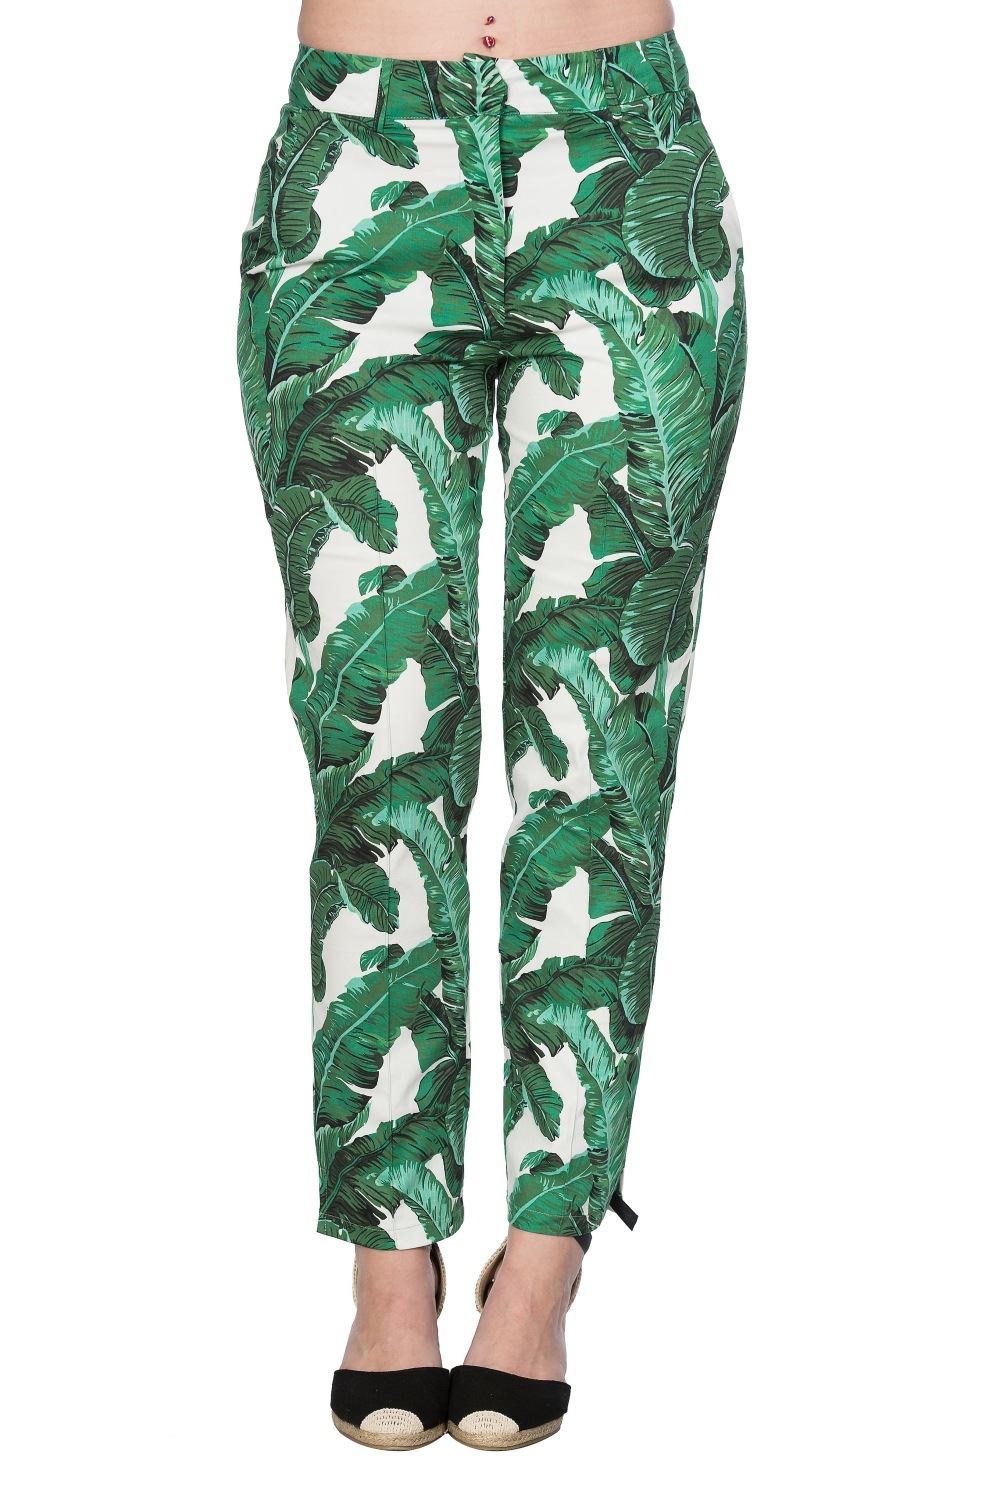 Pantalon Banned Pinup Rétro 40\'s 50\'s Rockabilly Tropical Leaves